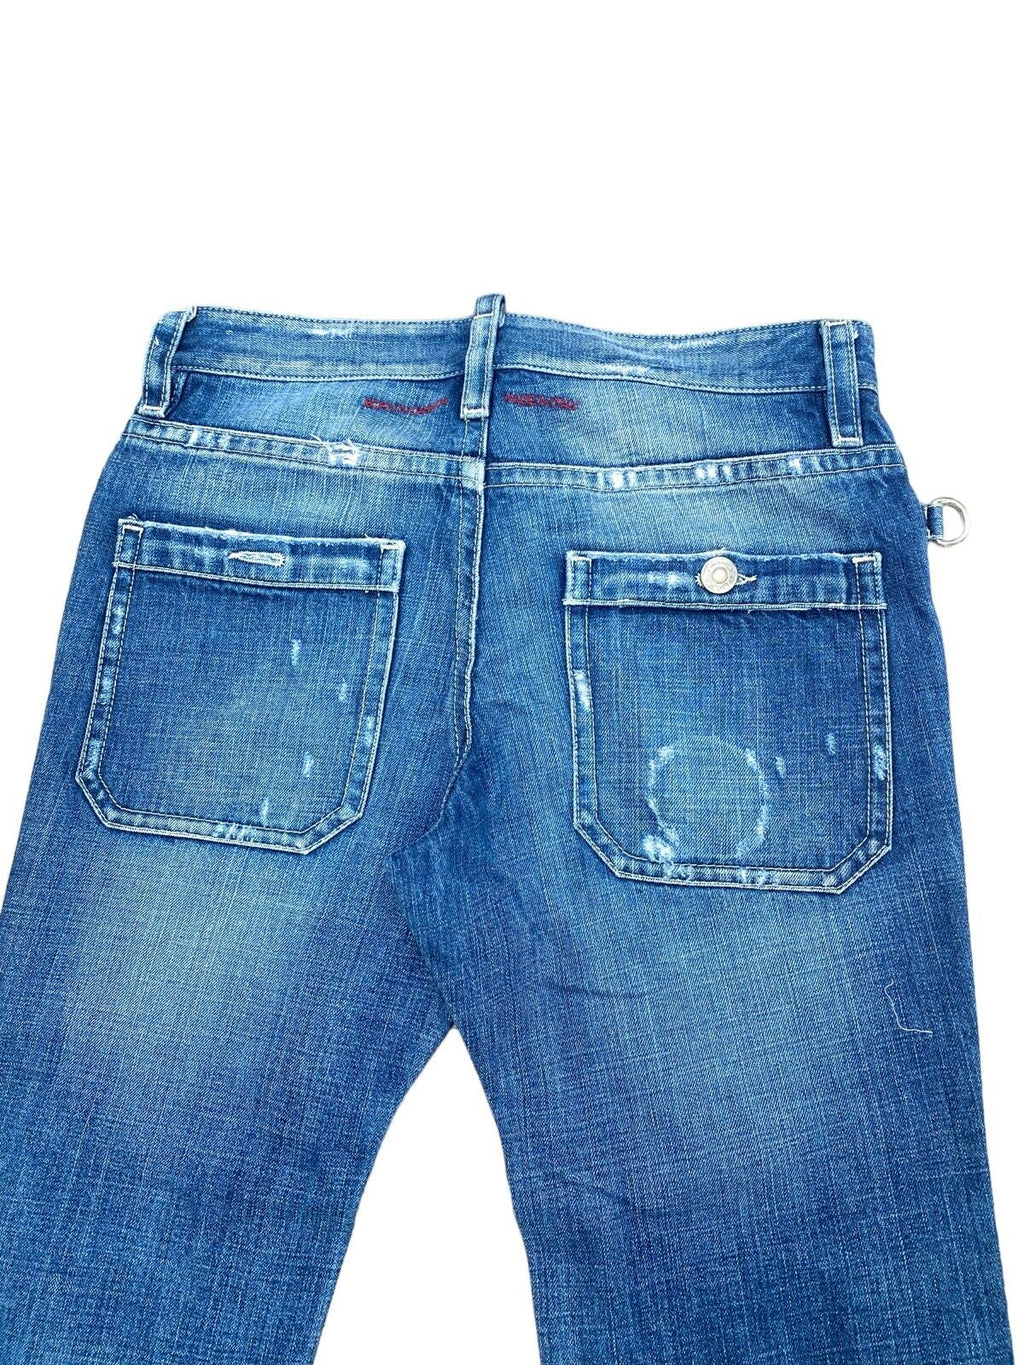 SS 2007 Blue Denim Jeans Size 44 fits 31 Dsquared2